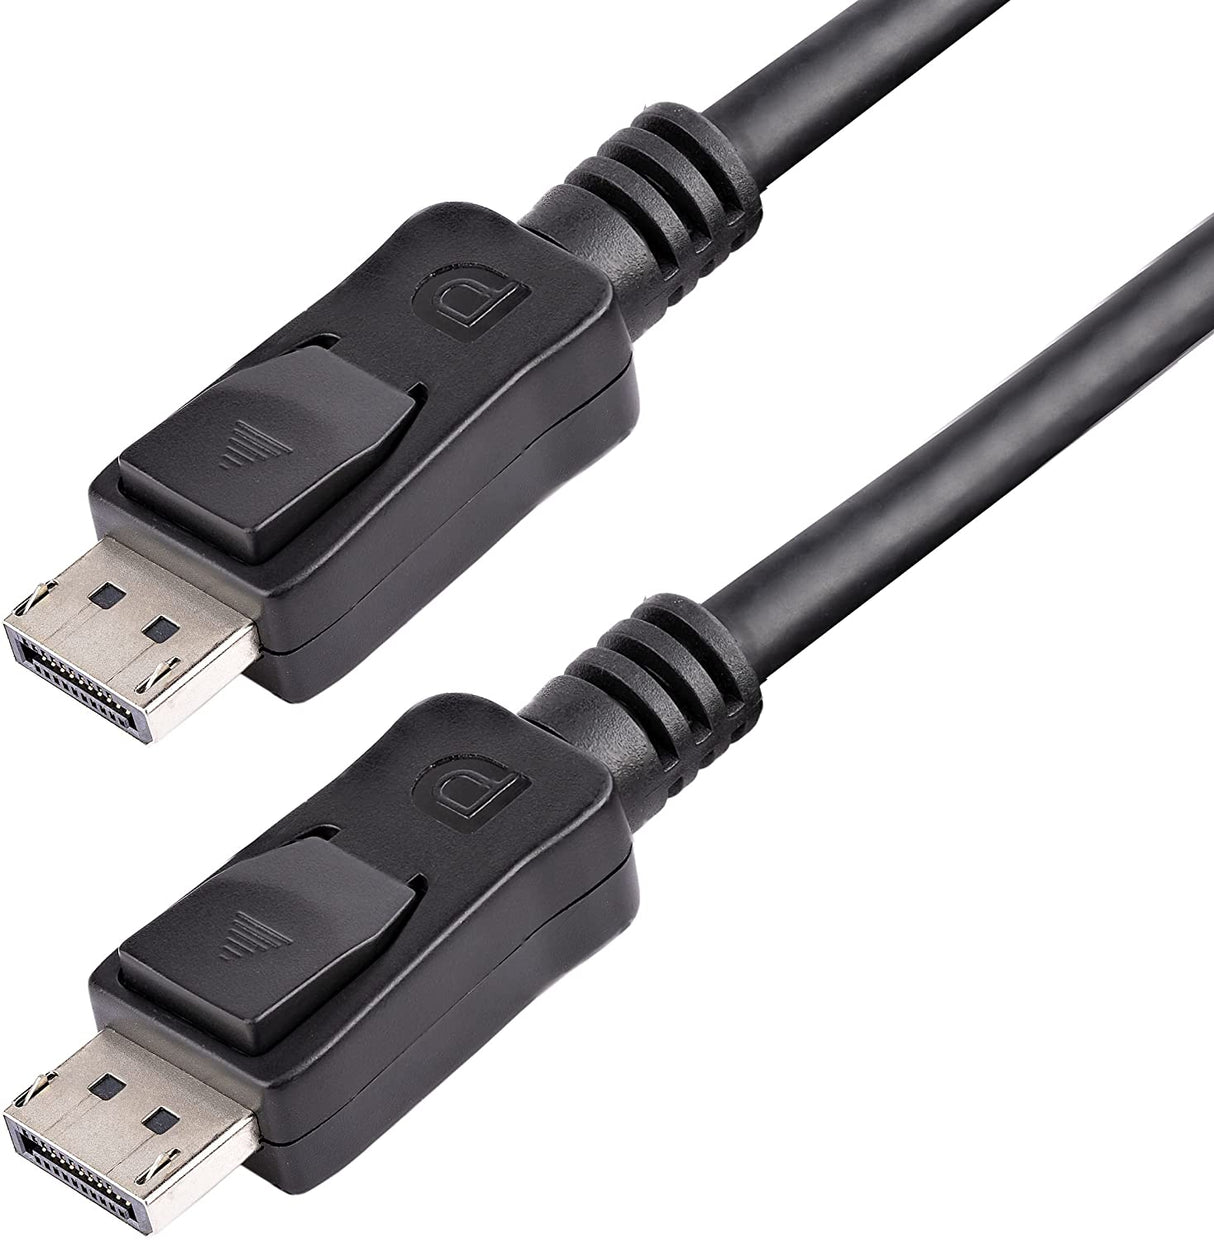 StarTech.com 20ft (6m) DisplayPort Cable - 2560 x 1440p - DisplayPort to DisplayPort Cable - DP to DP Cable for Monitor - DP Video/Display Cord - Latching DP Connectors - HDCP &amp; DPCP (DISPLPORT20L)